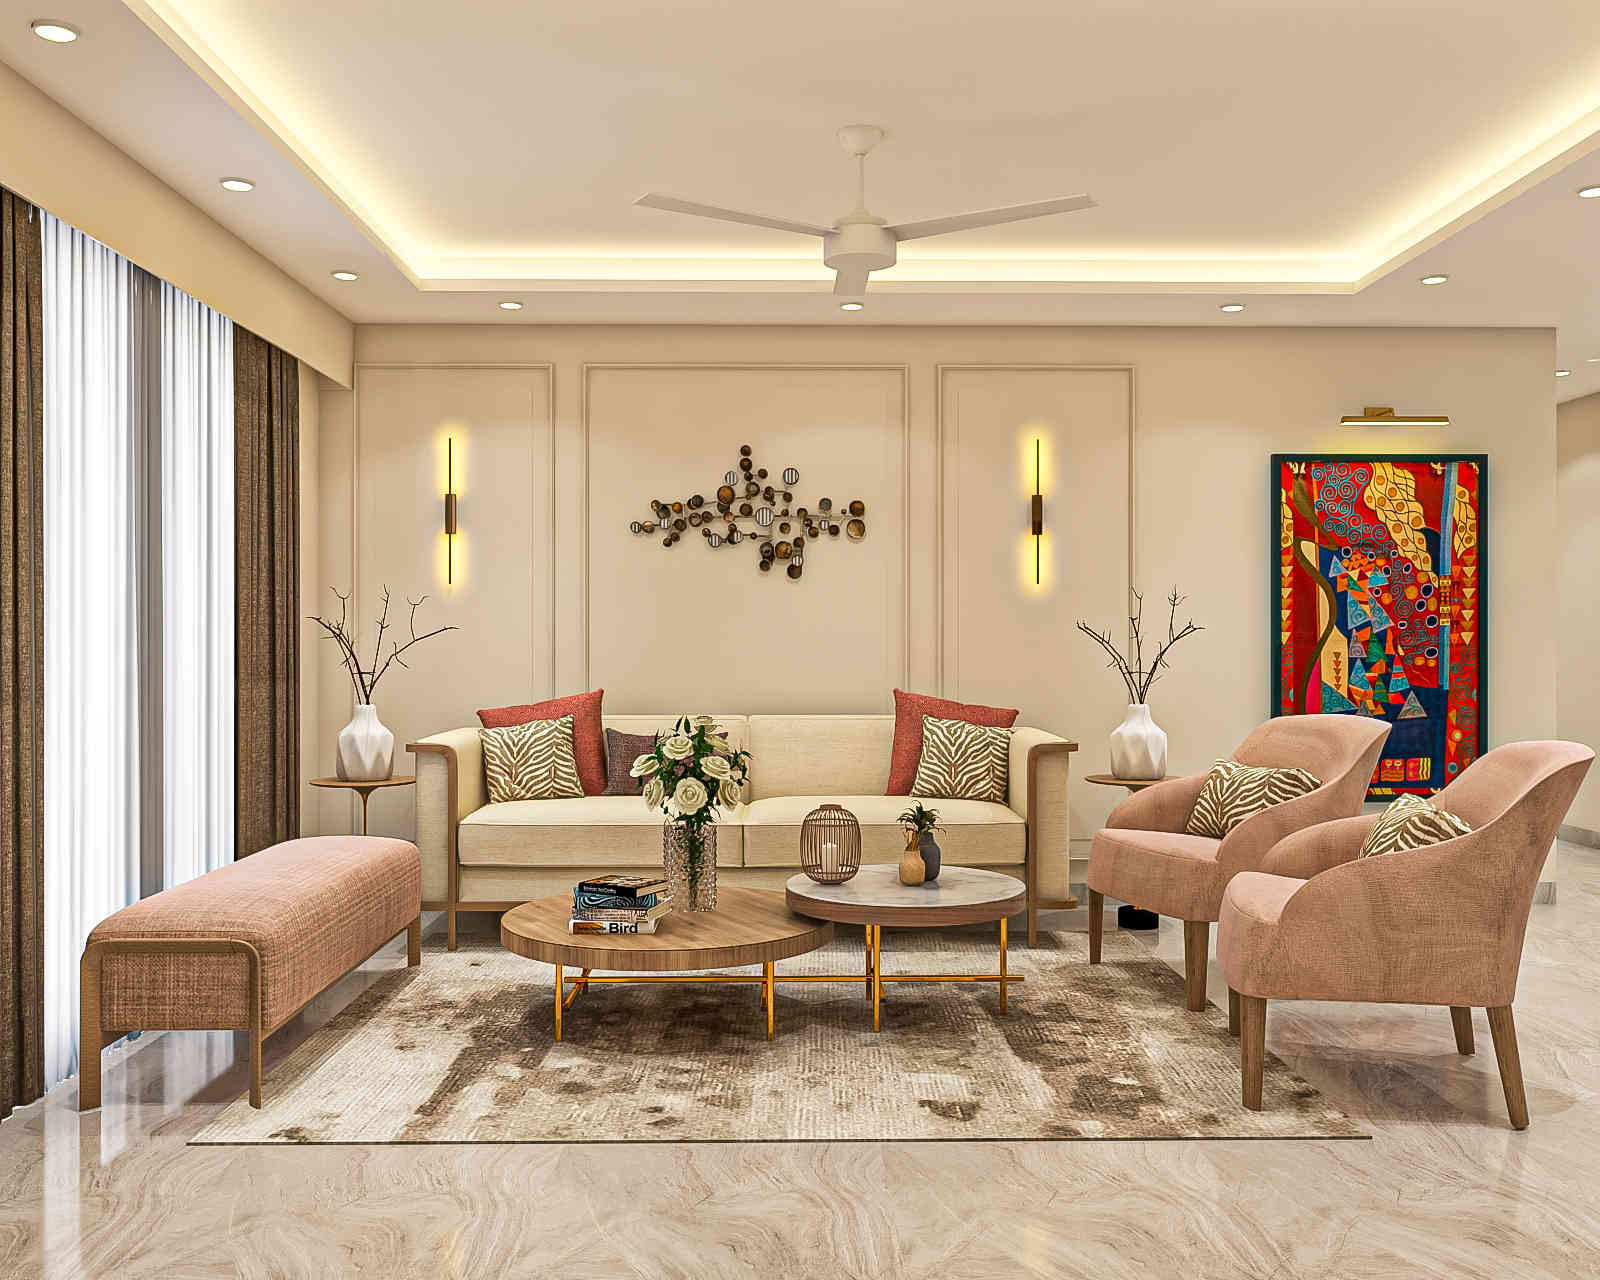 Contemporary Living Room Design With Wall Decor